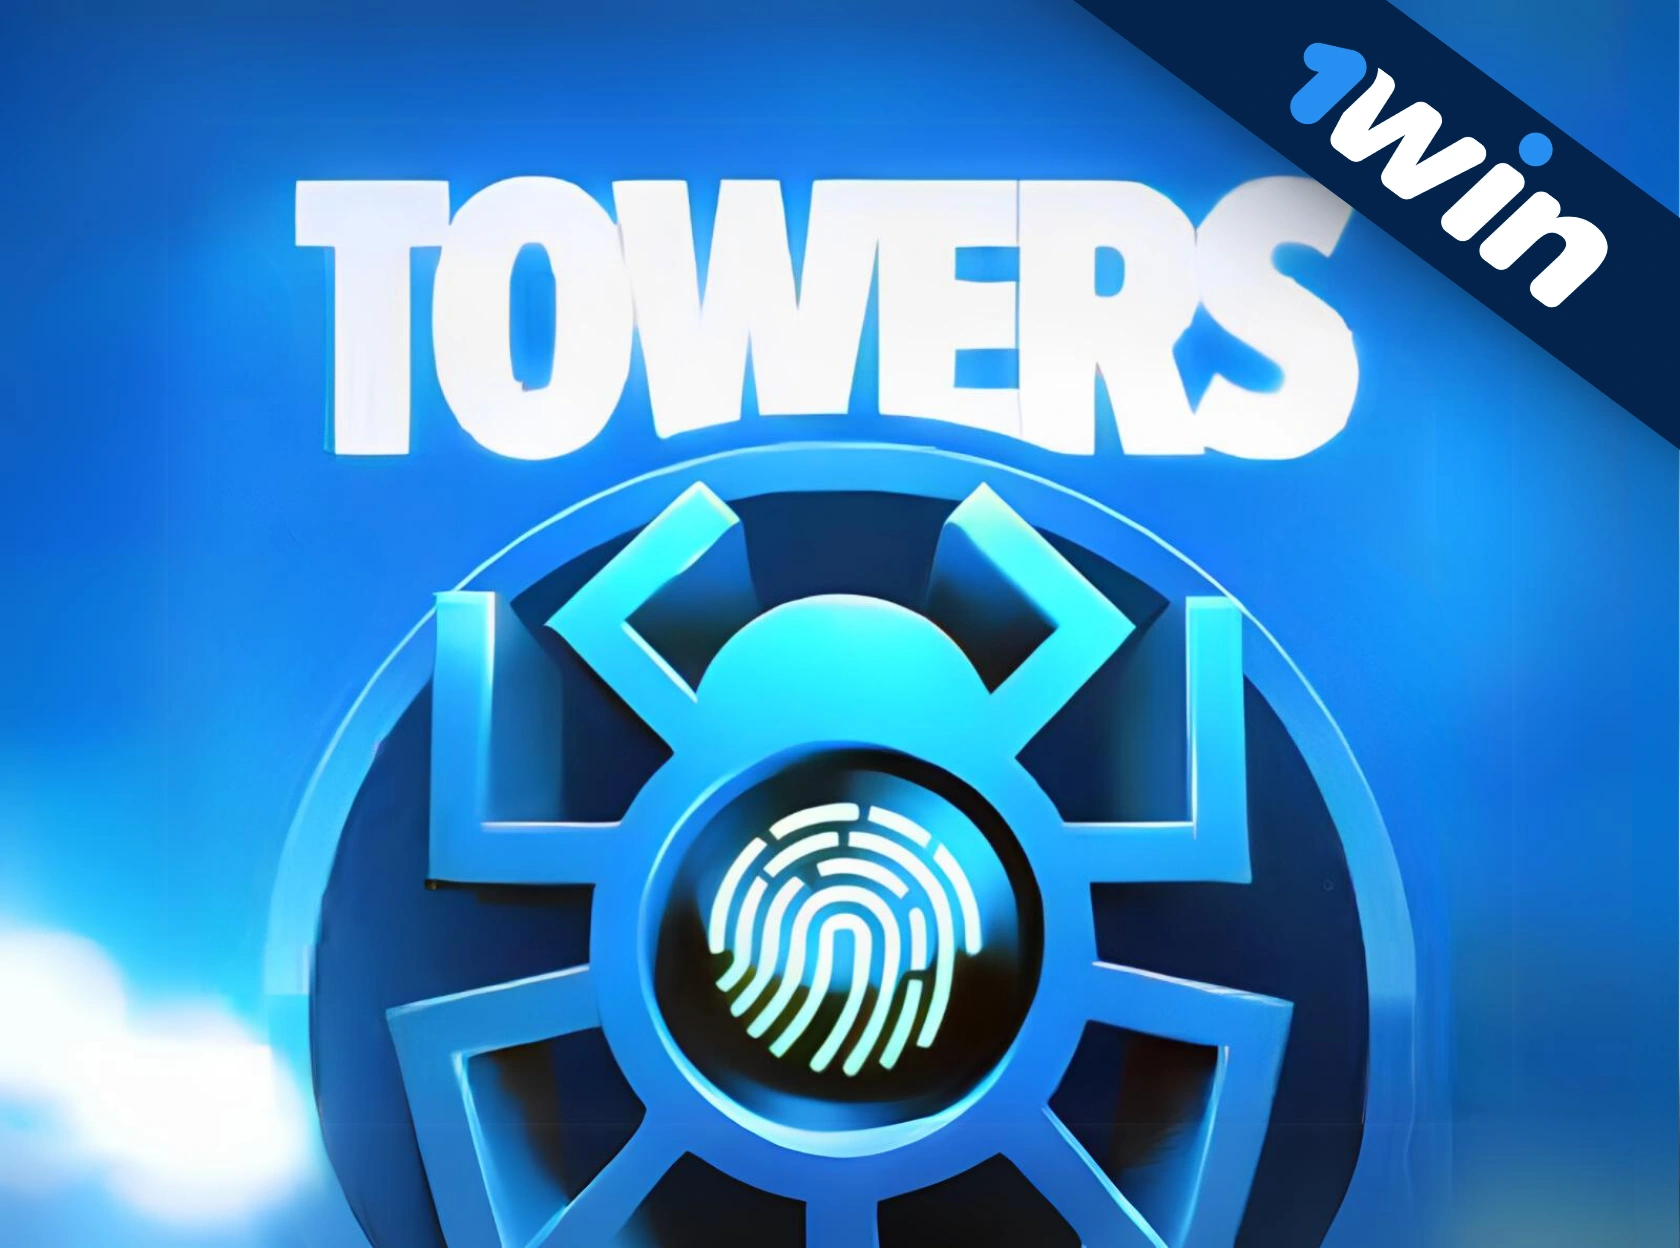 Towers 1win - নতুন একচেটিয়া খেলা!